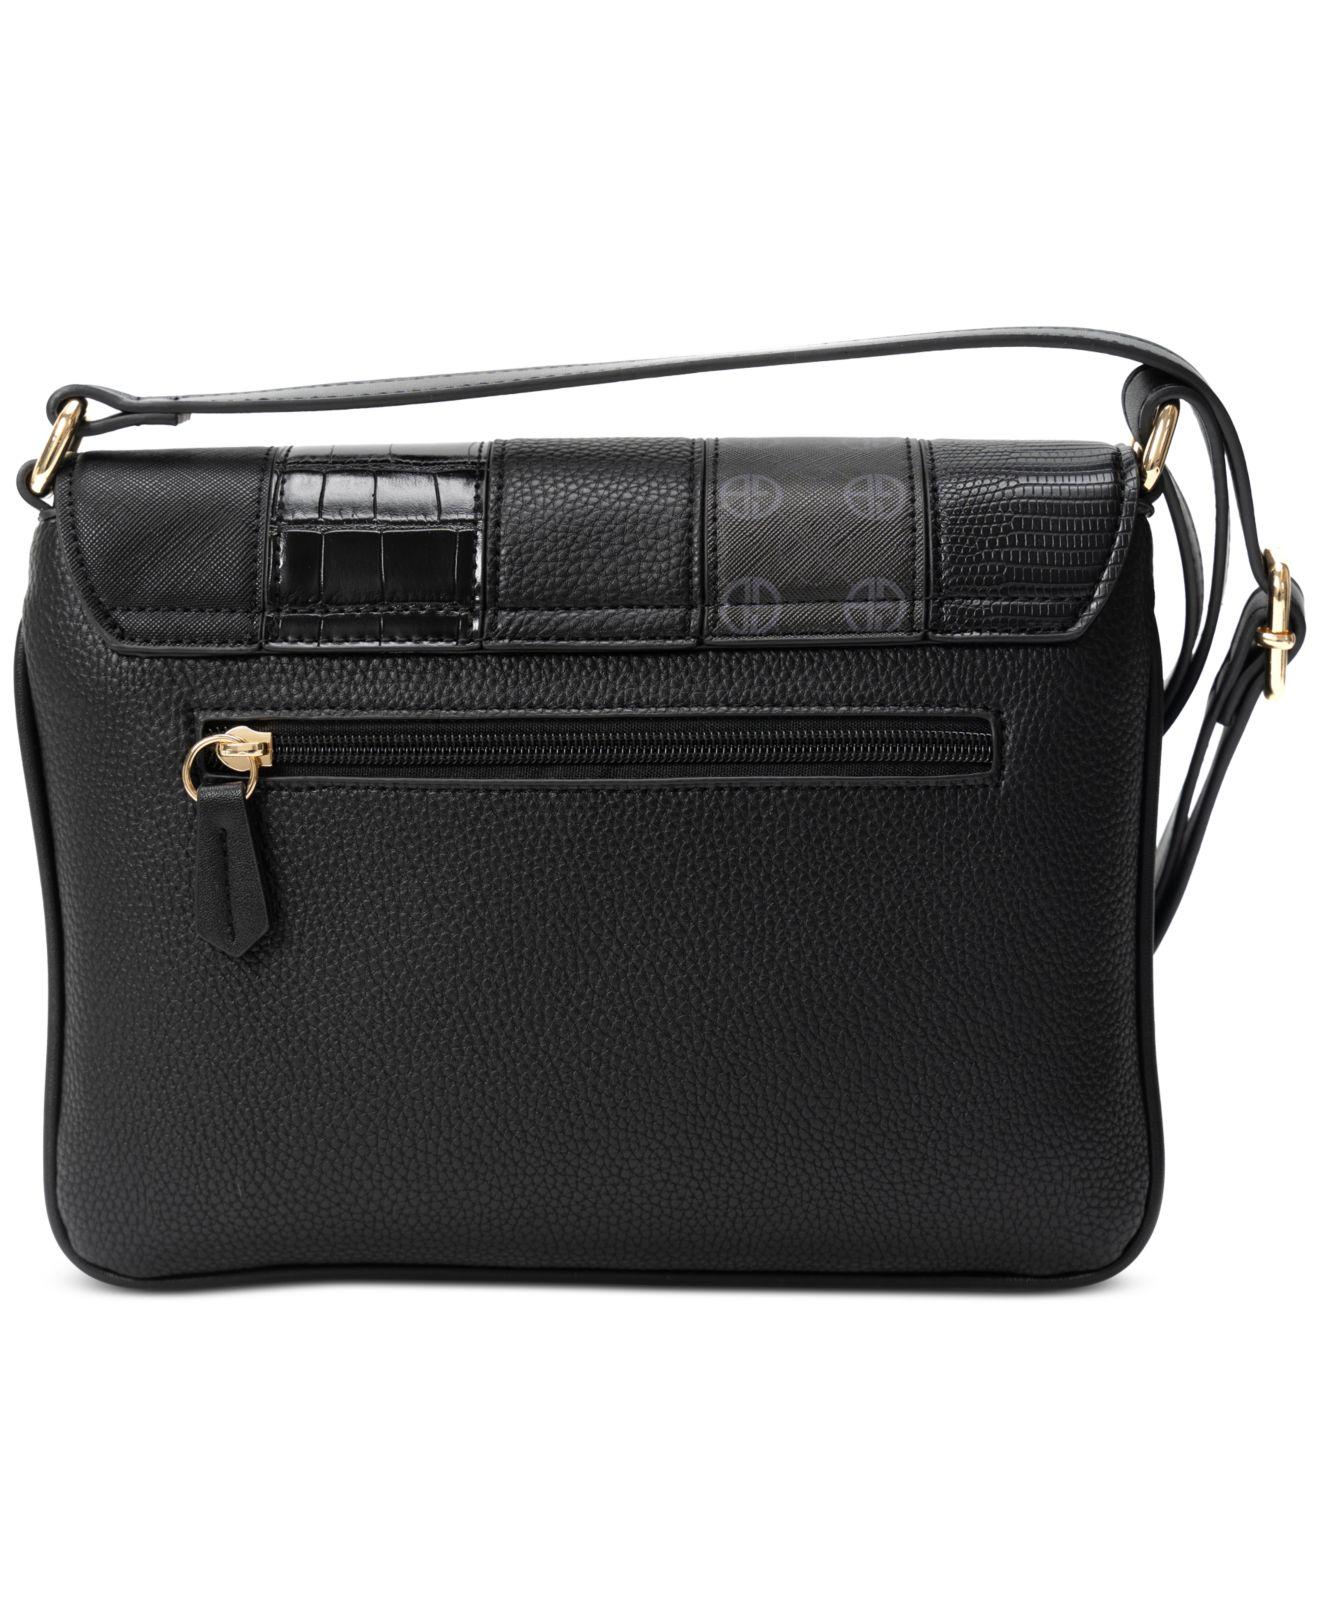 Giani Bernini Women's Black Leather Double Flat Strap Handbag